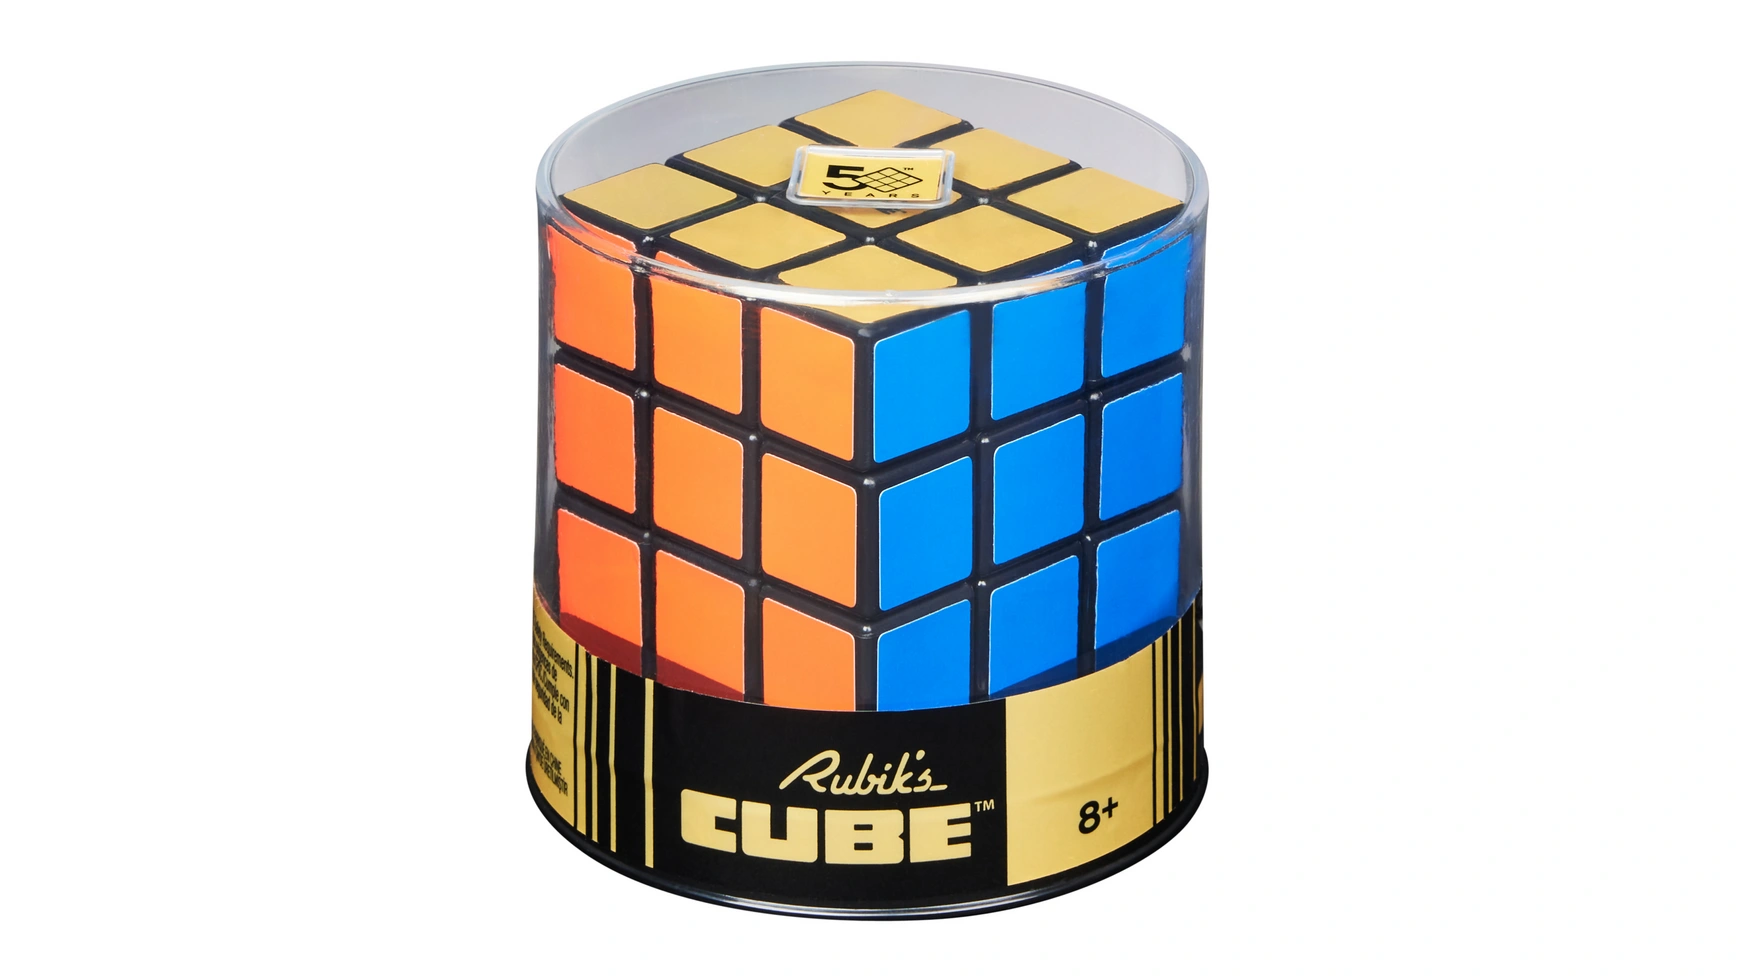 Ретро-кубик Рубика 3x3 Кубик Рубика кубик 3x3, внешний вид которого напоминает оригинал 50-летней давности Spin Master игрушка rubiks кубик рубика 3x3 2020